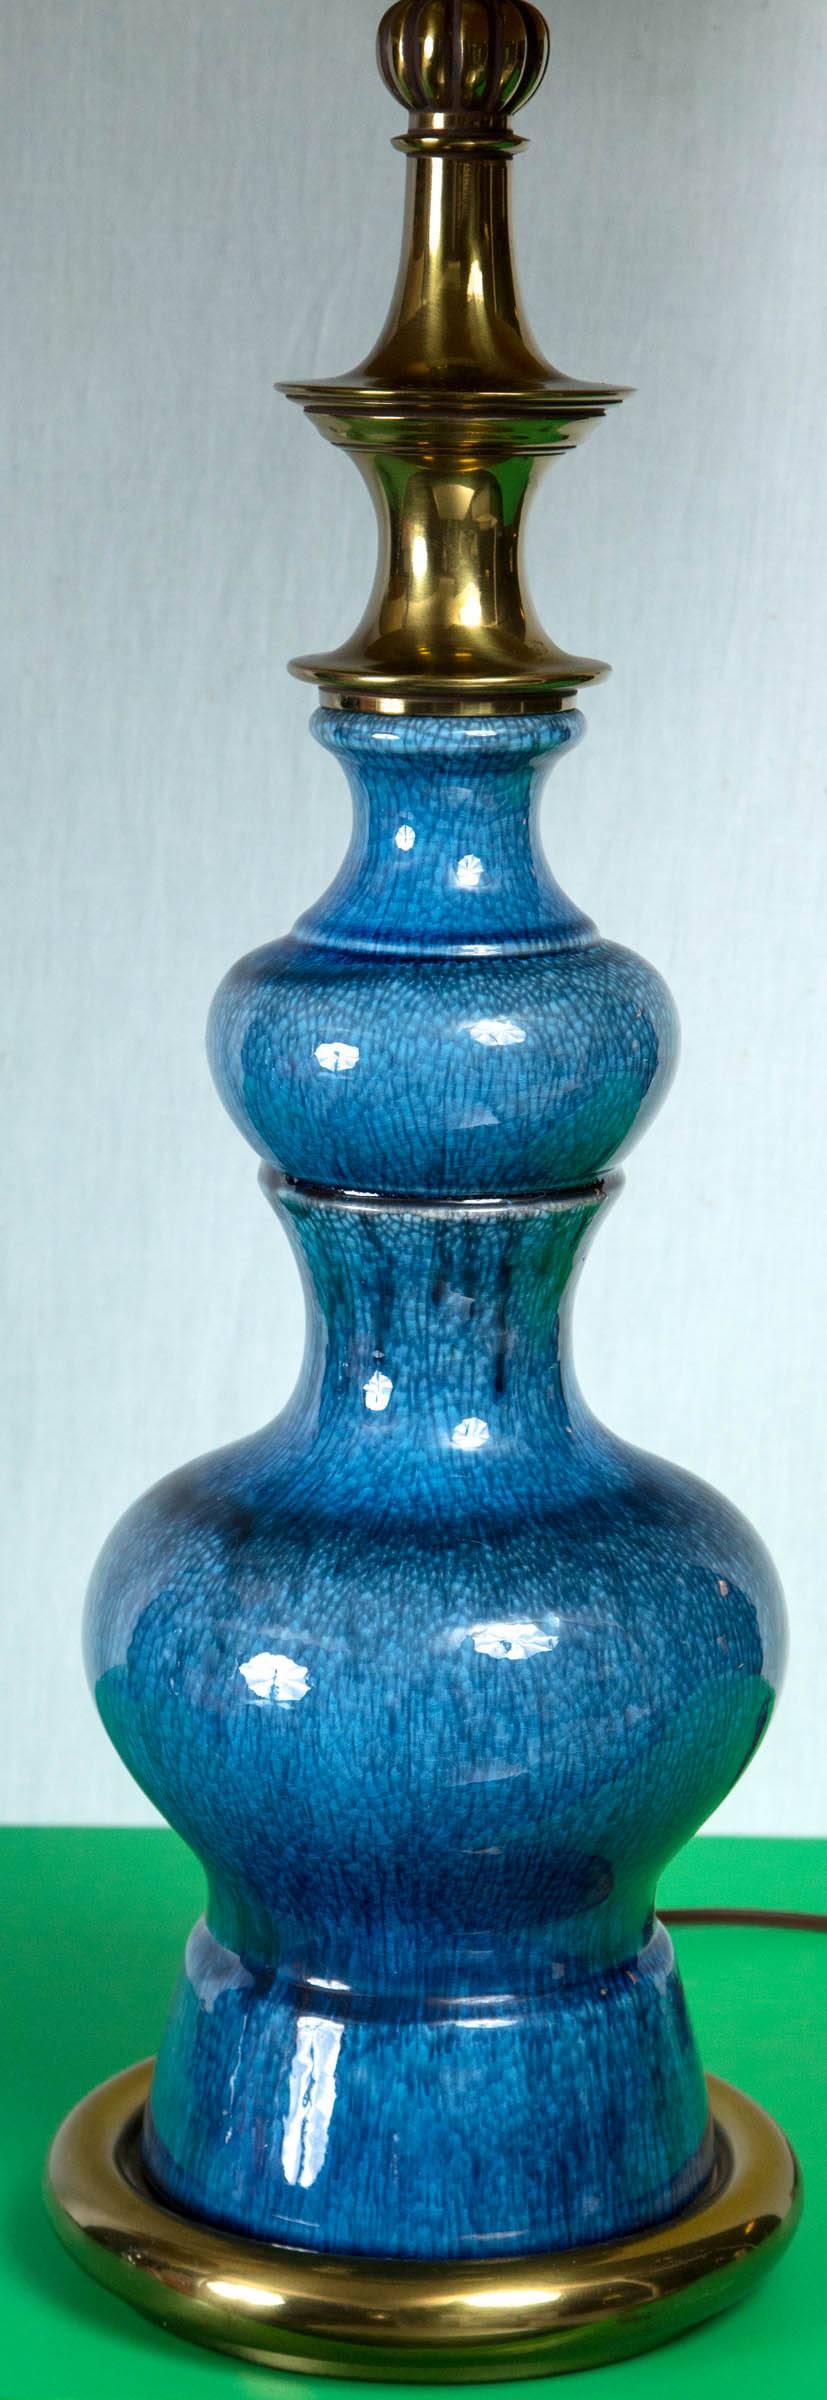 American Pair of Midcentury Modern Blue Ceramic Stiffel Lamps with Original Shades